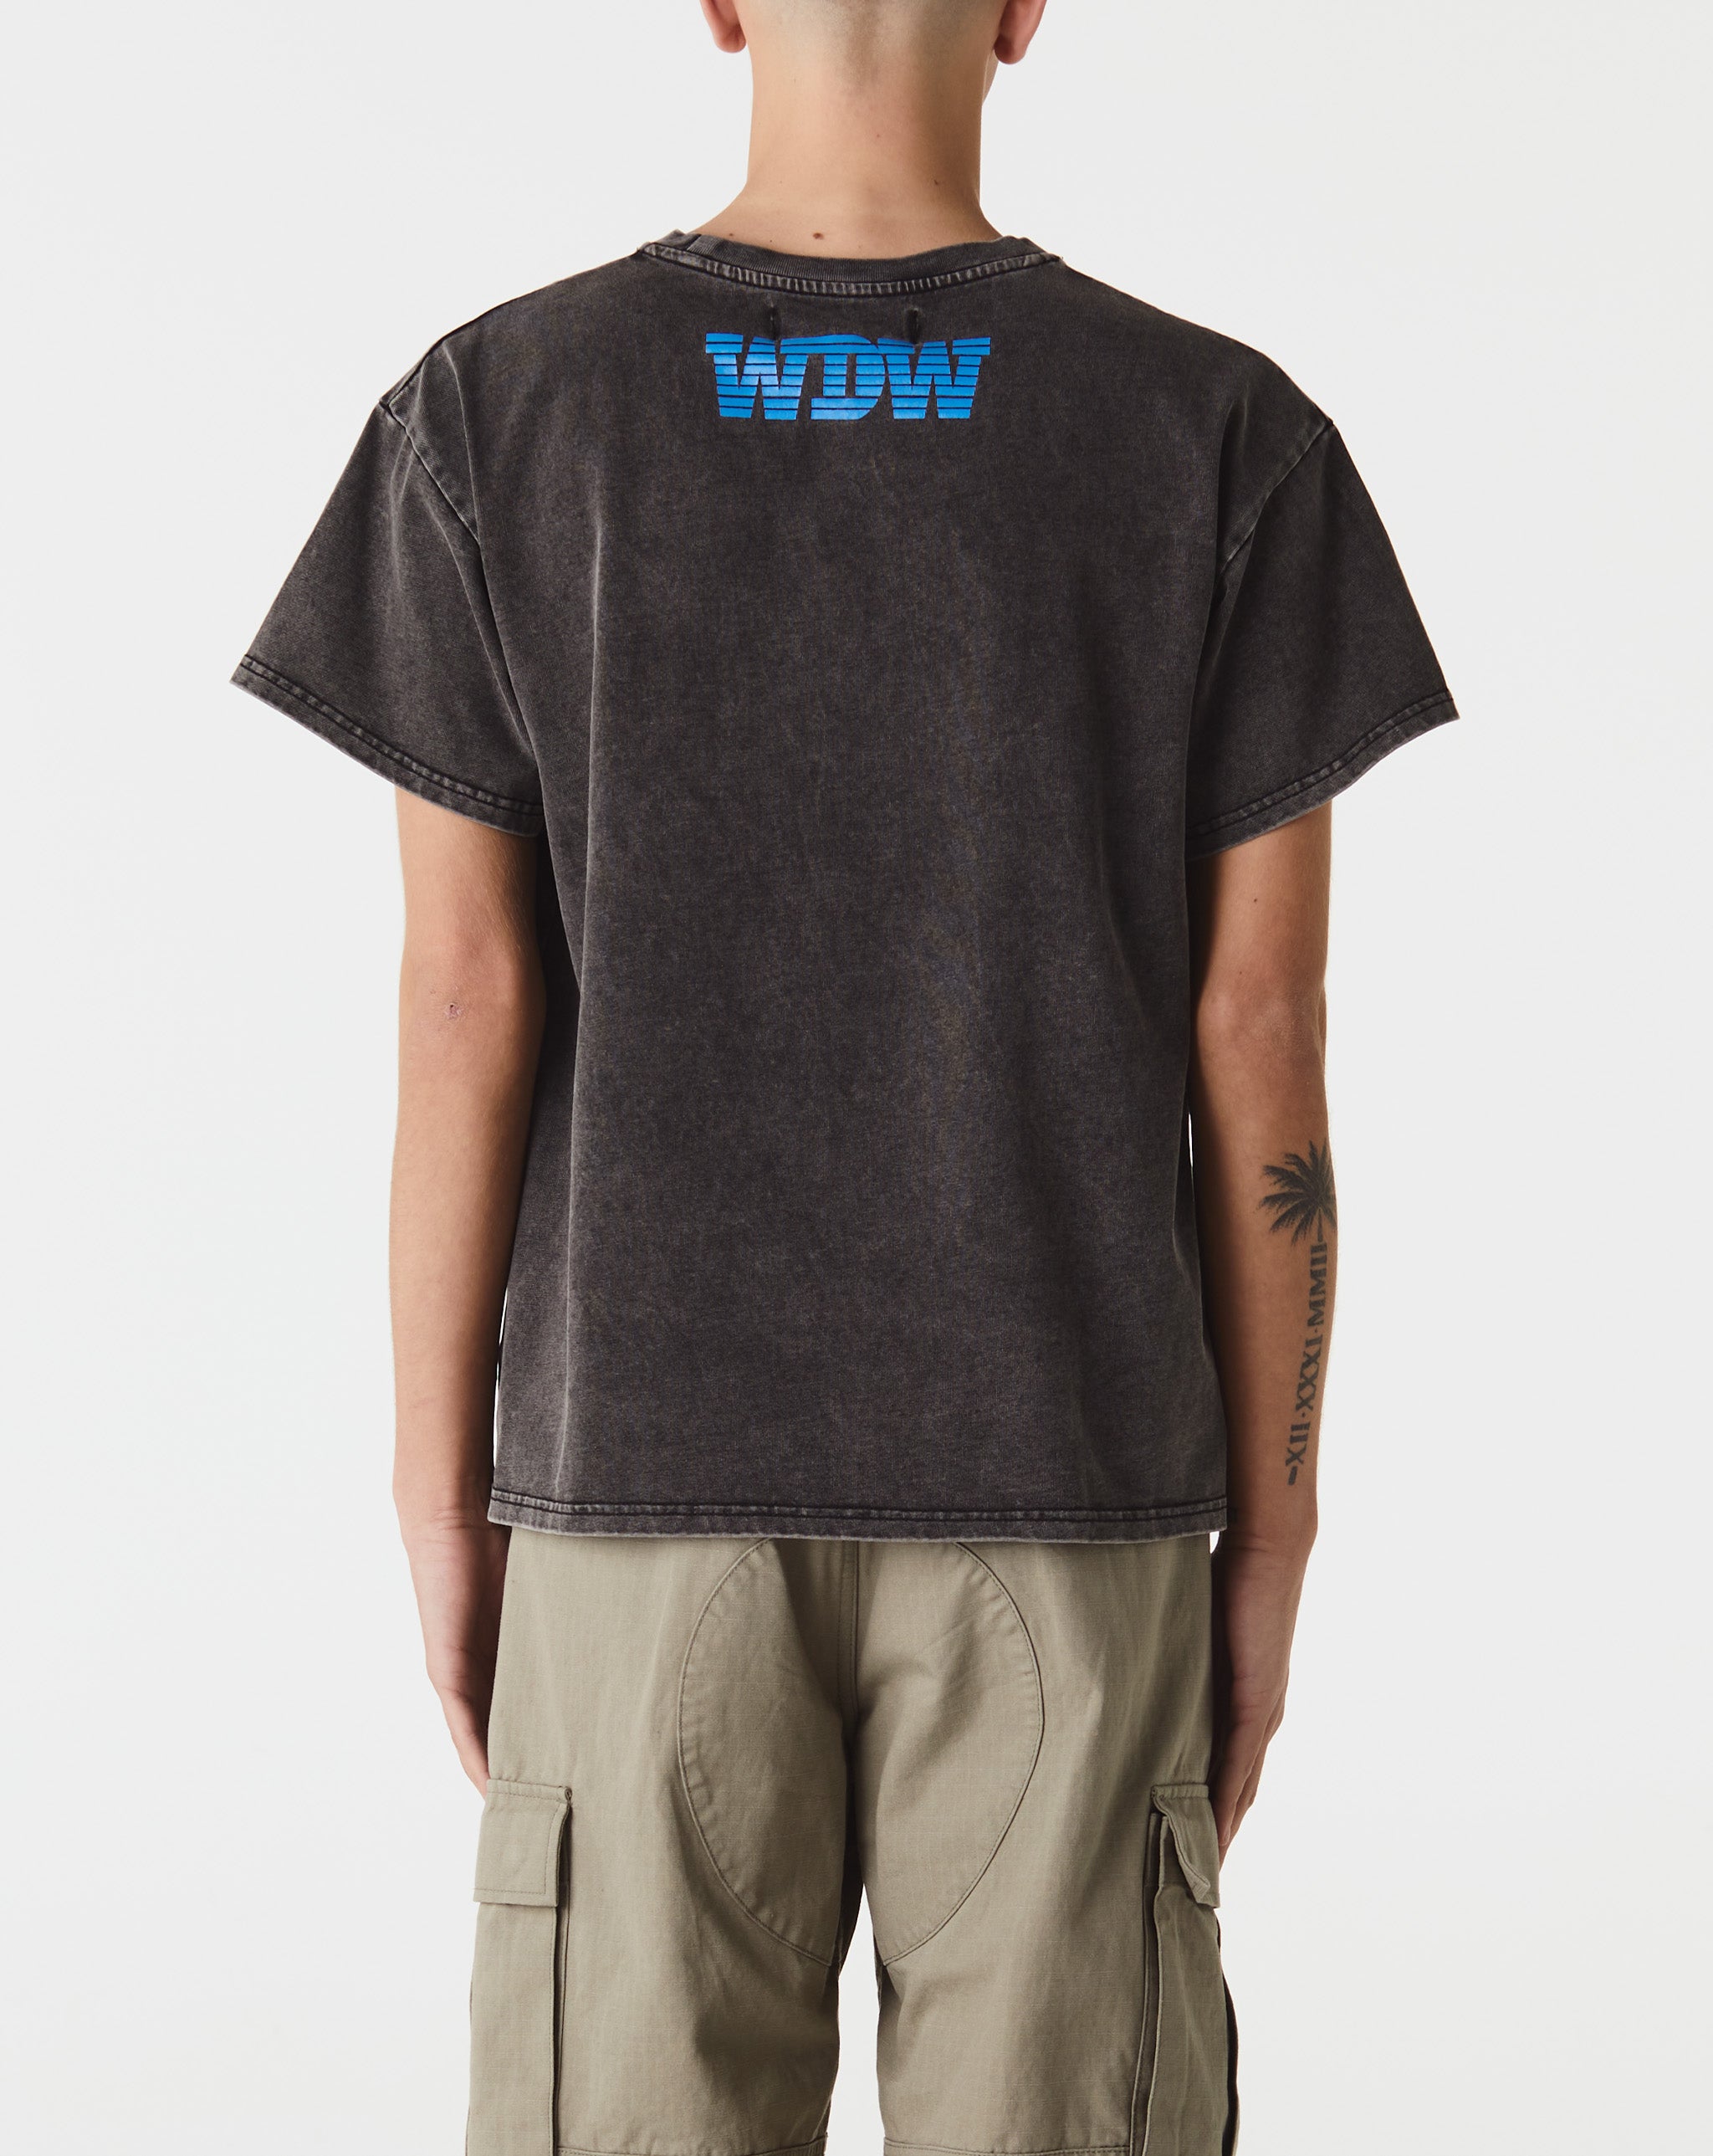 nike air force 1 low size 9 black uggs Transition T-Shirt  - Cheap Urlfreeze Jordan outlet